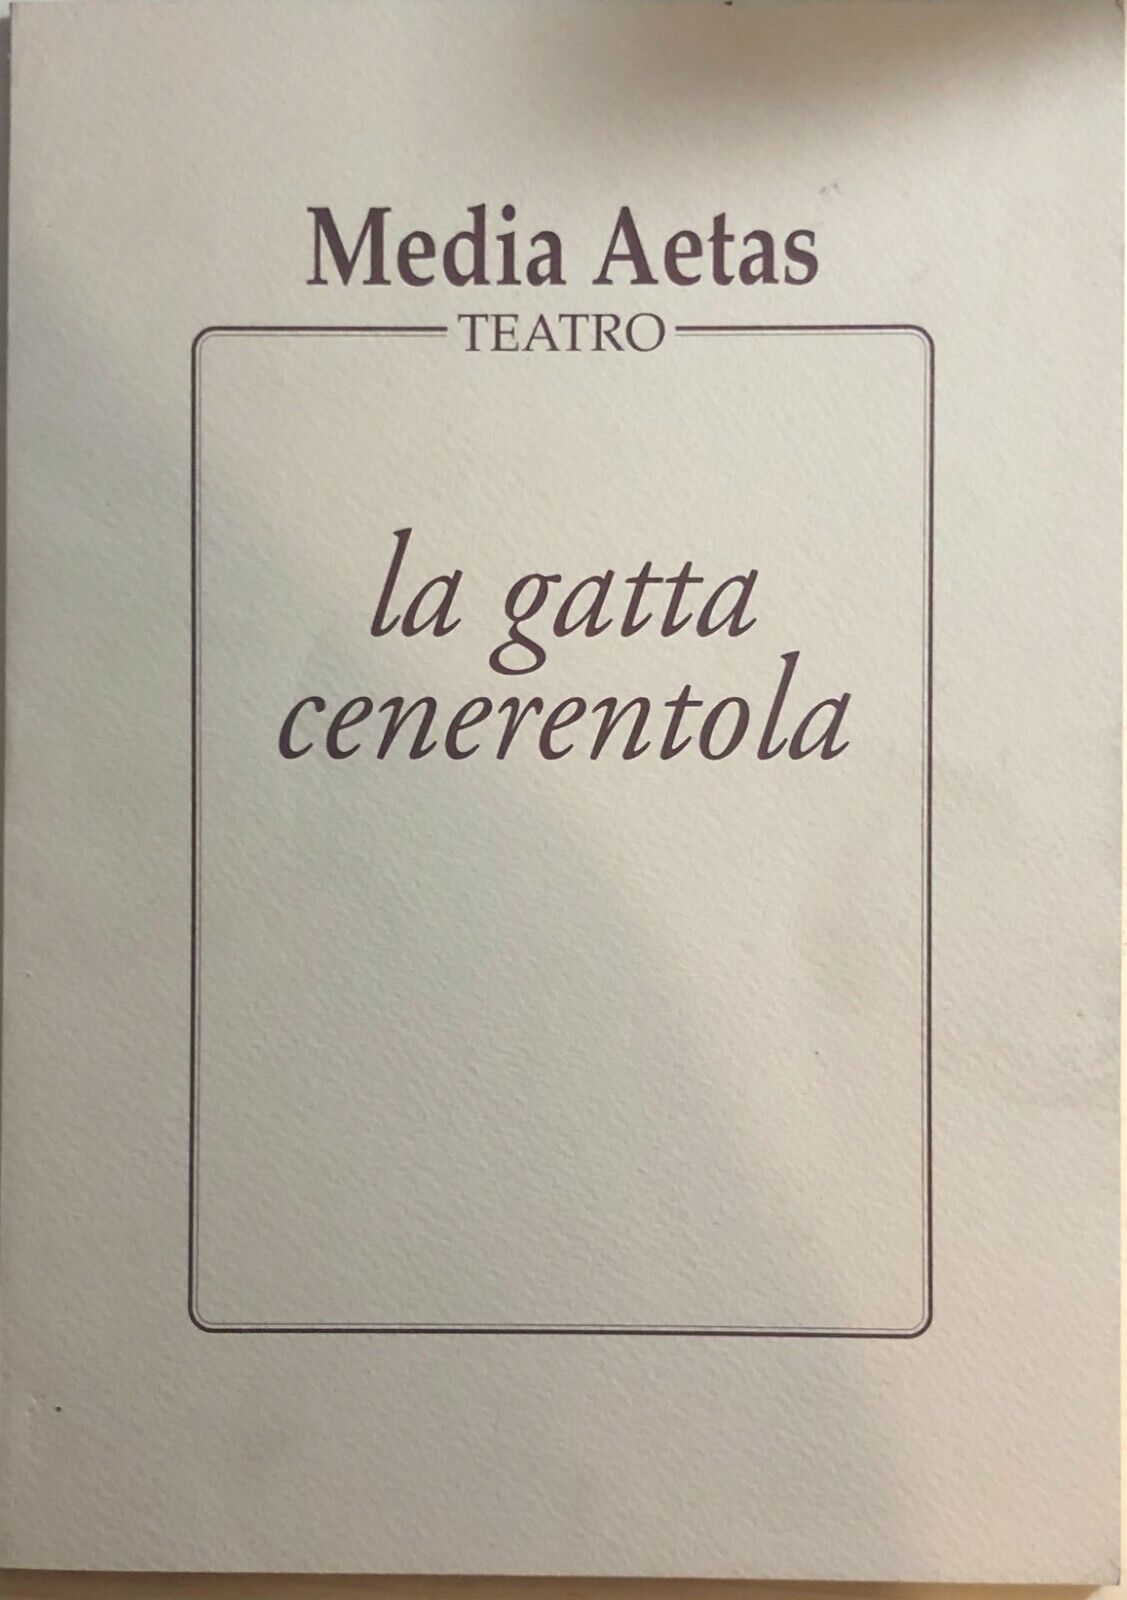 La gatta cenerentola di Media Aetas Teatro, 1997, Legma Srl